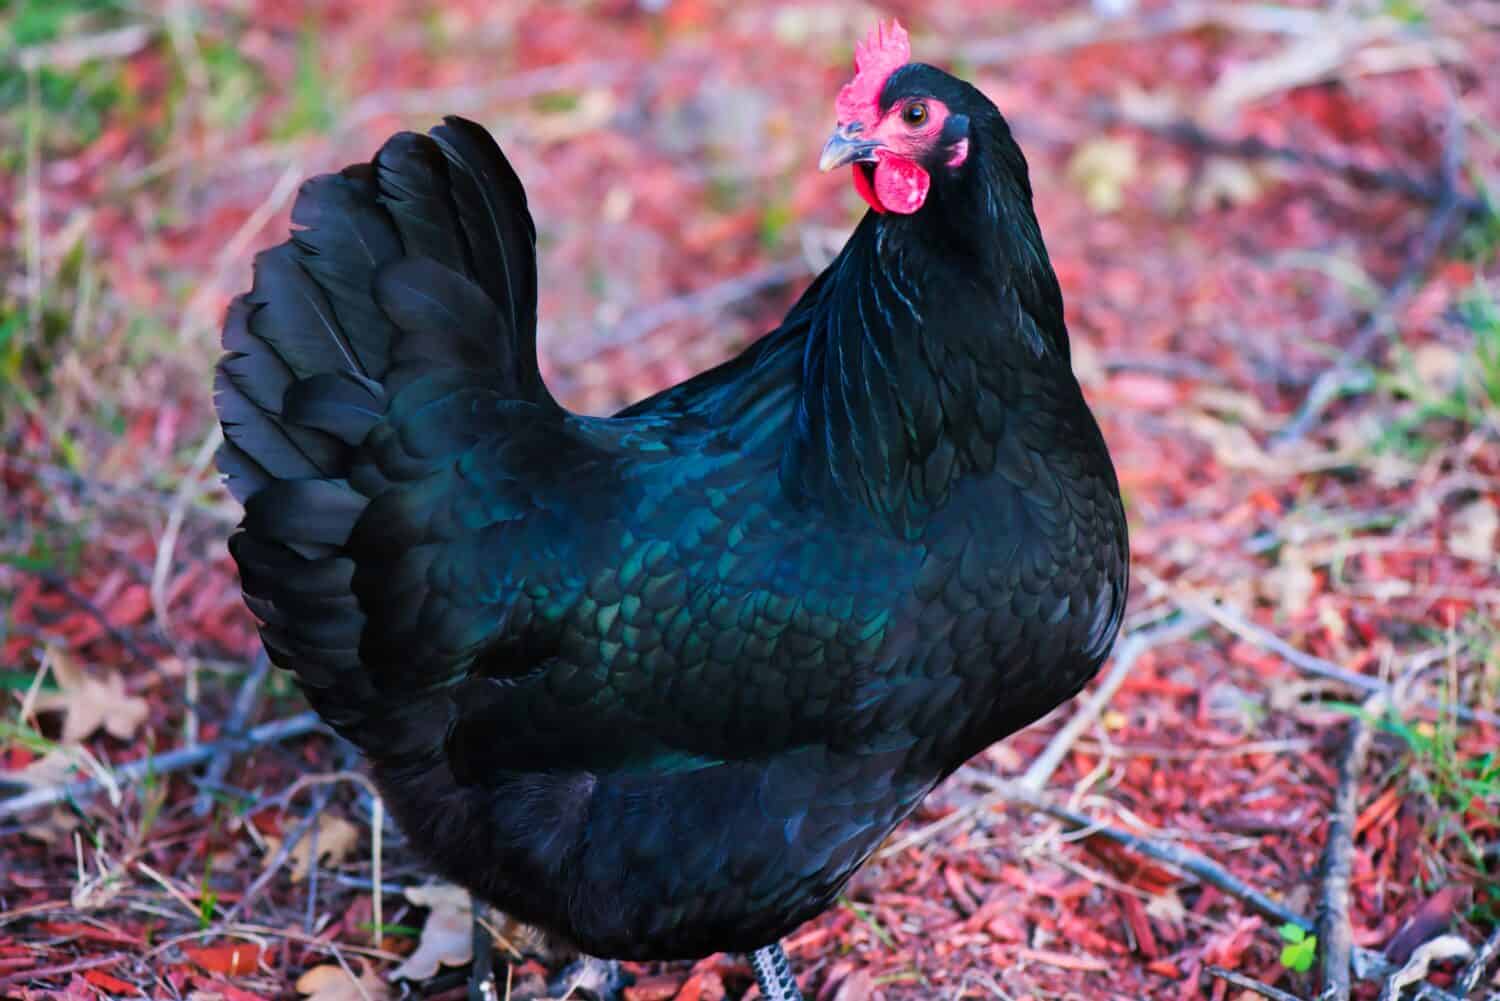 Free Range Blue Australorp Chicken Foraging in Autumn Leaves.